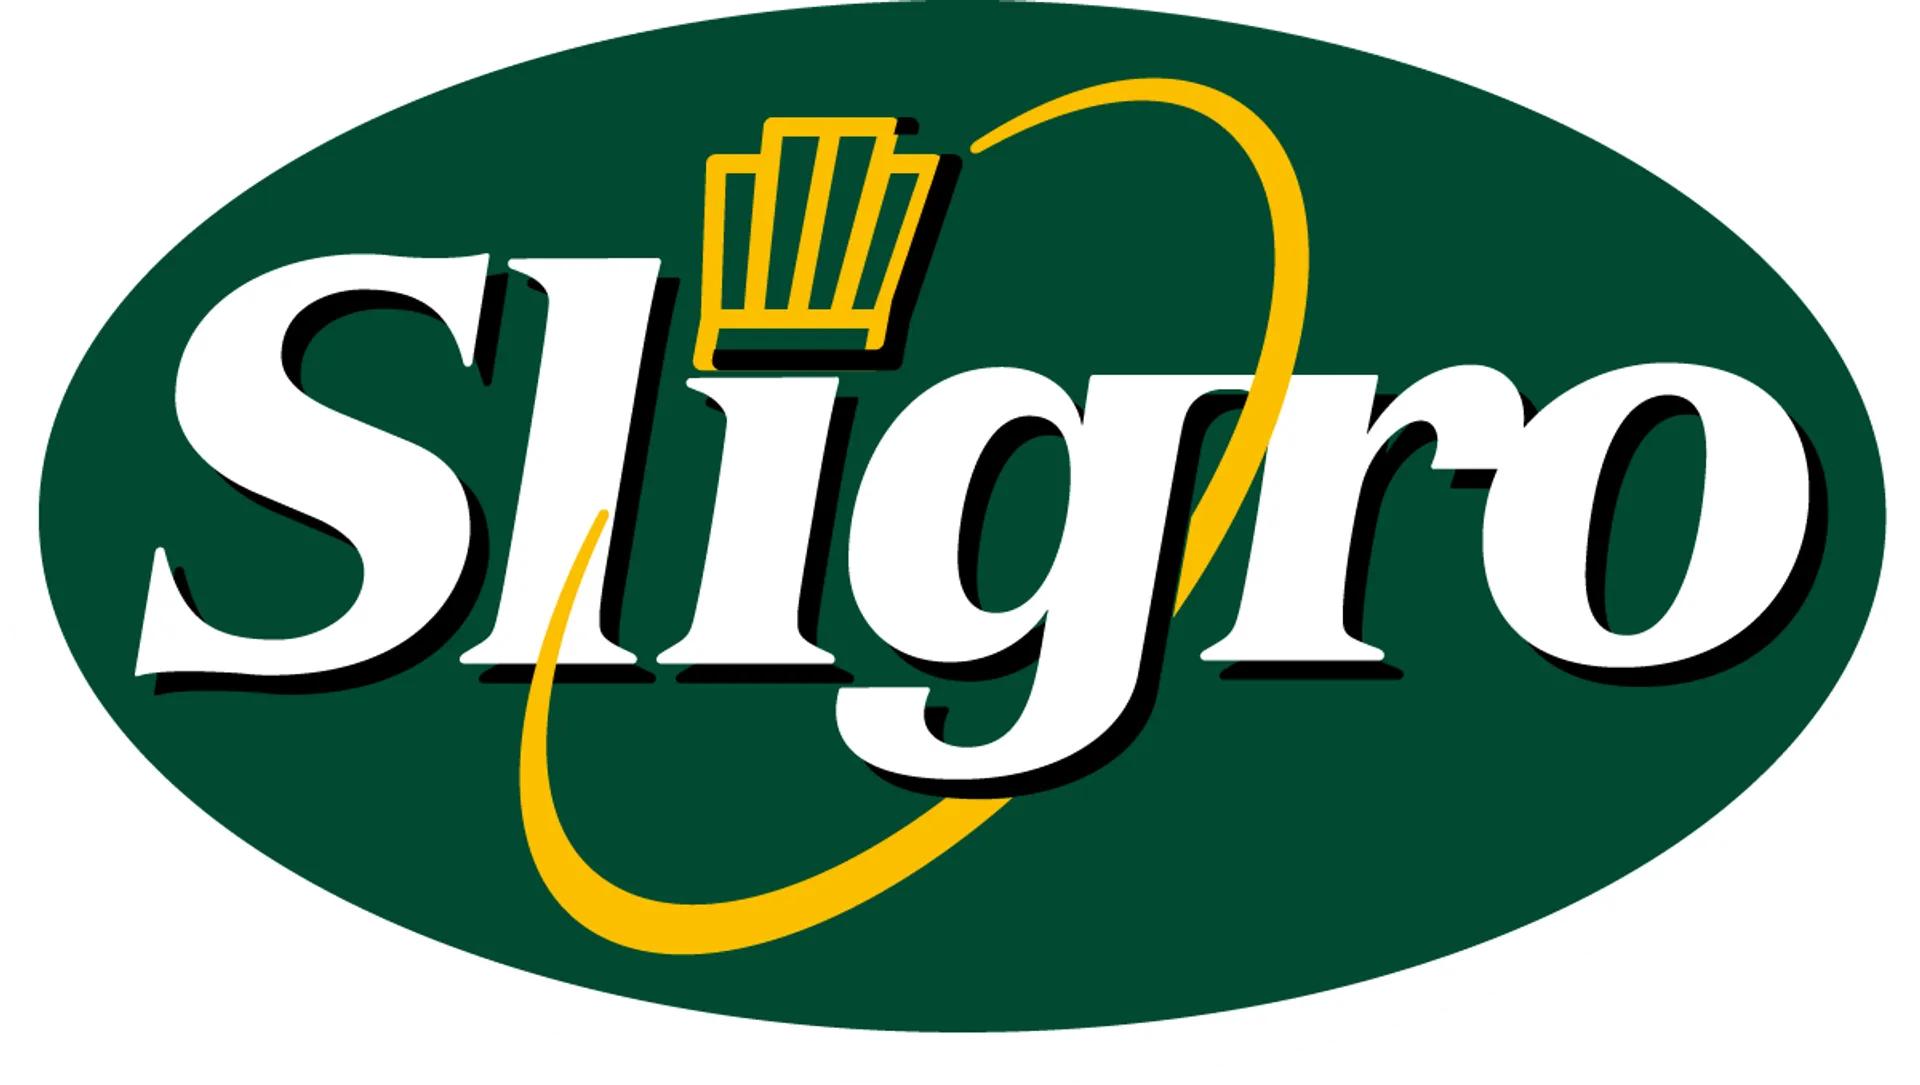 SLIGRO logo